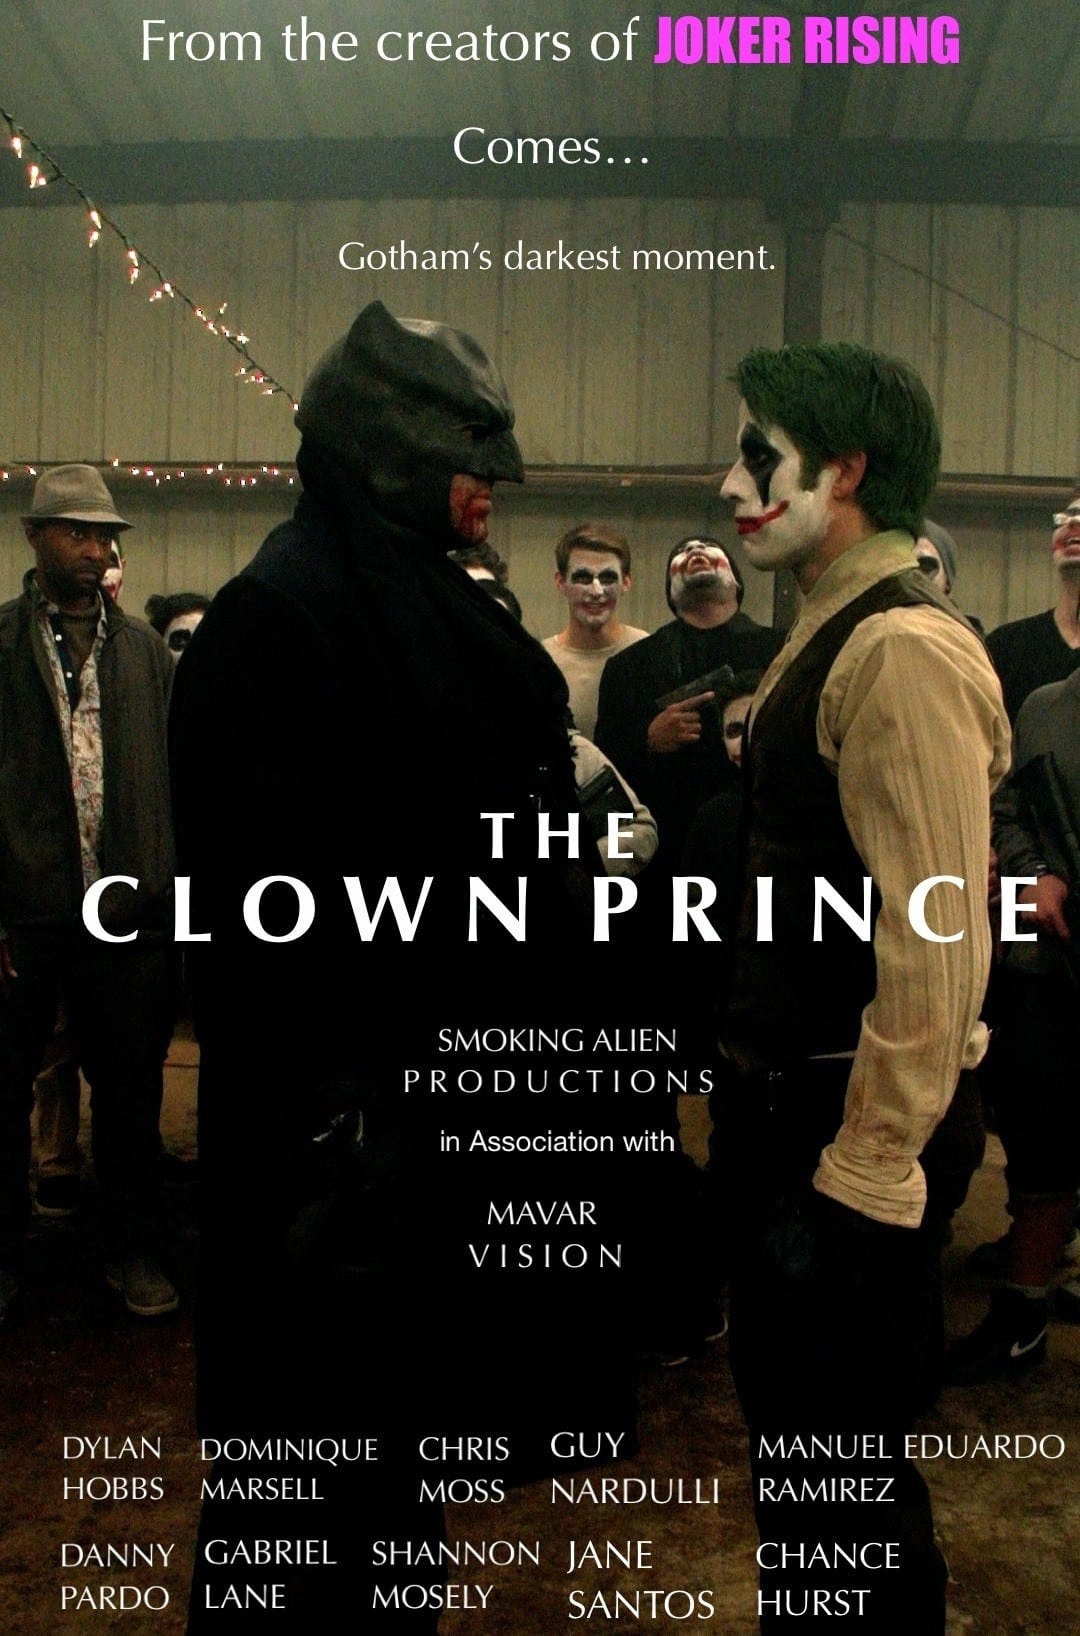 Joker Rising 2: The Clown Prince film